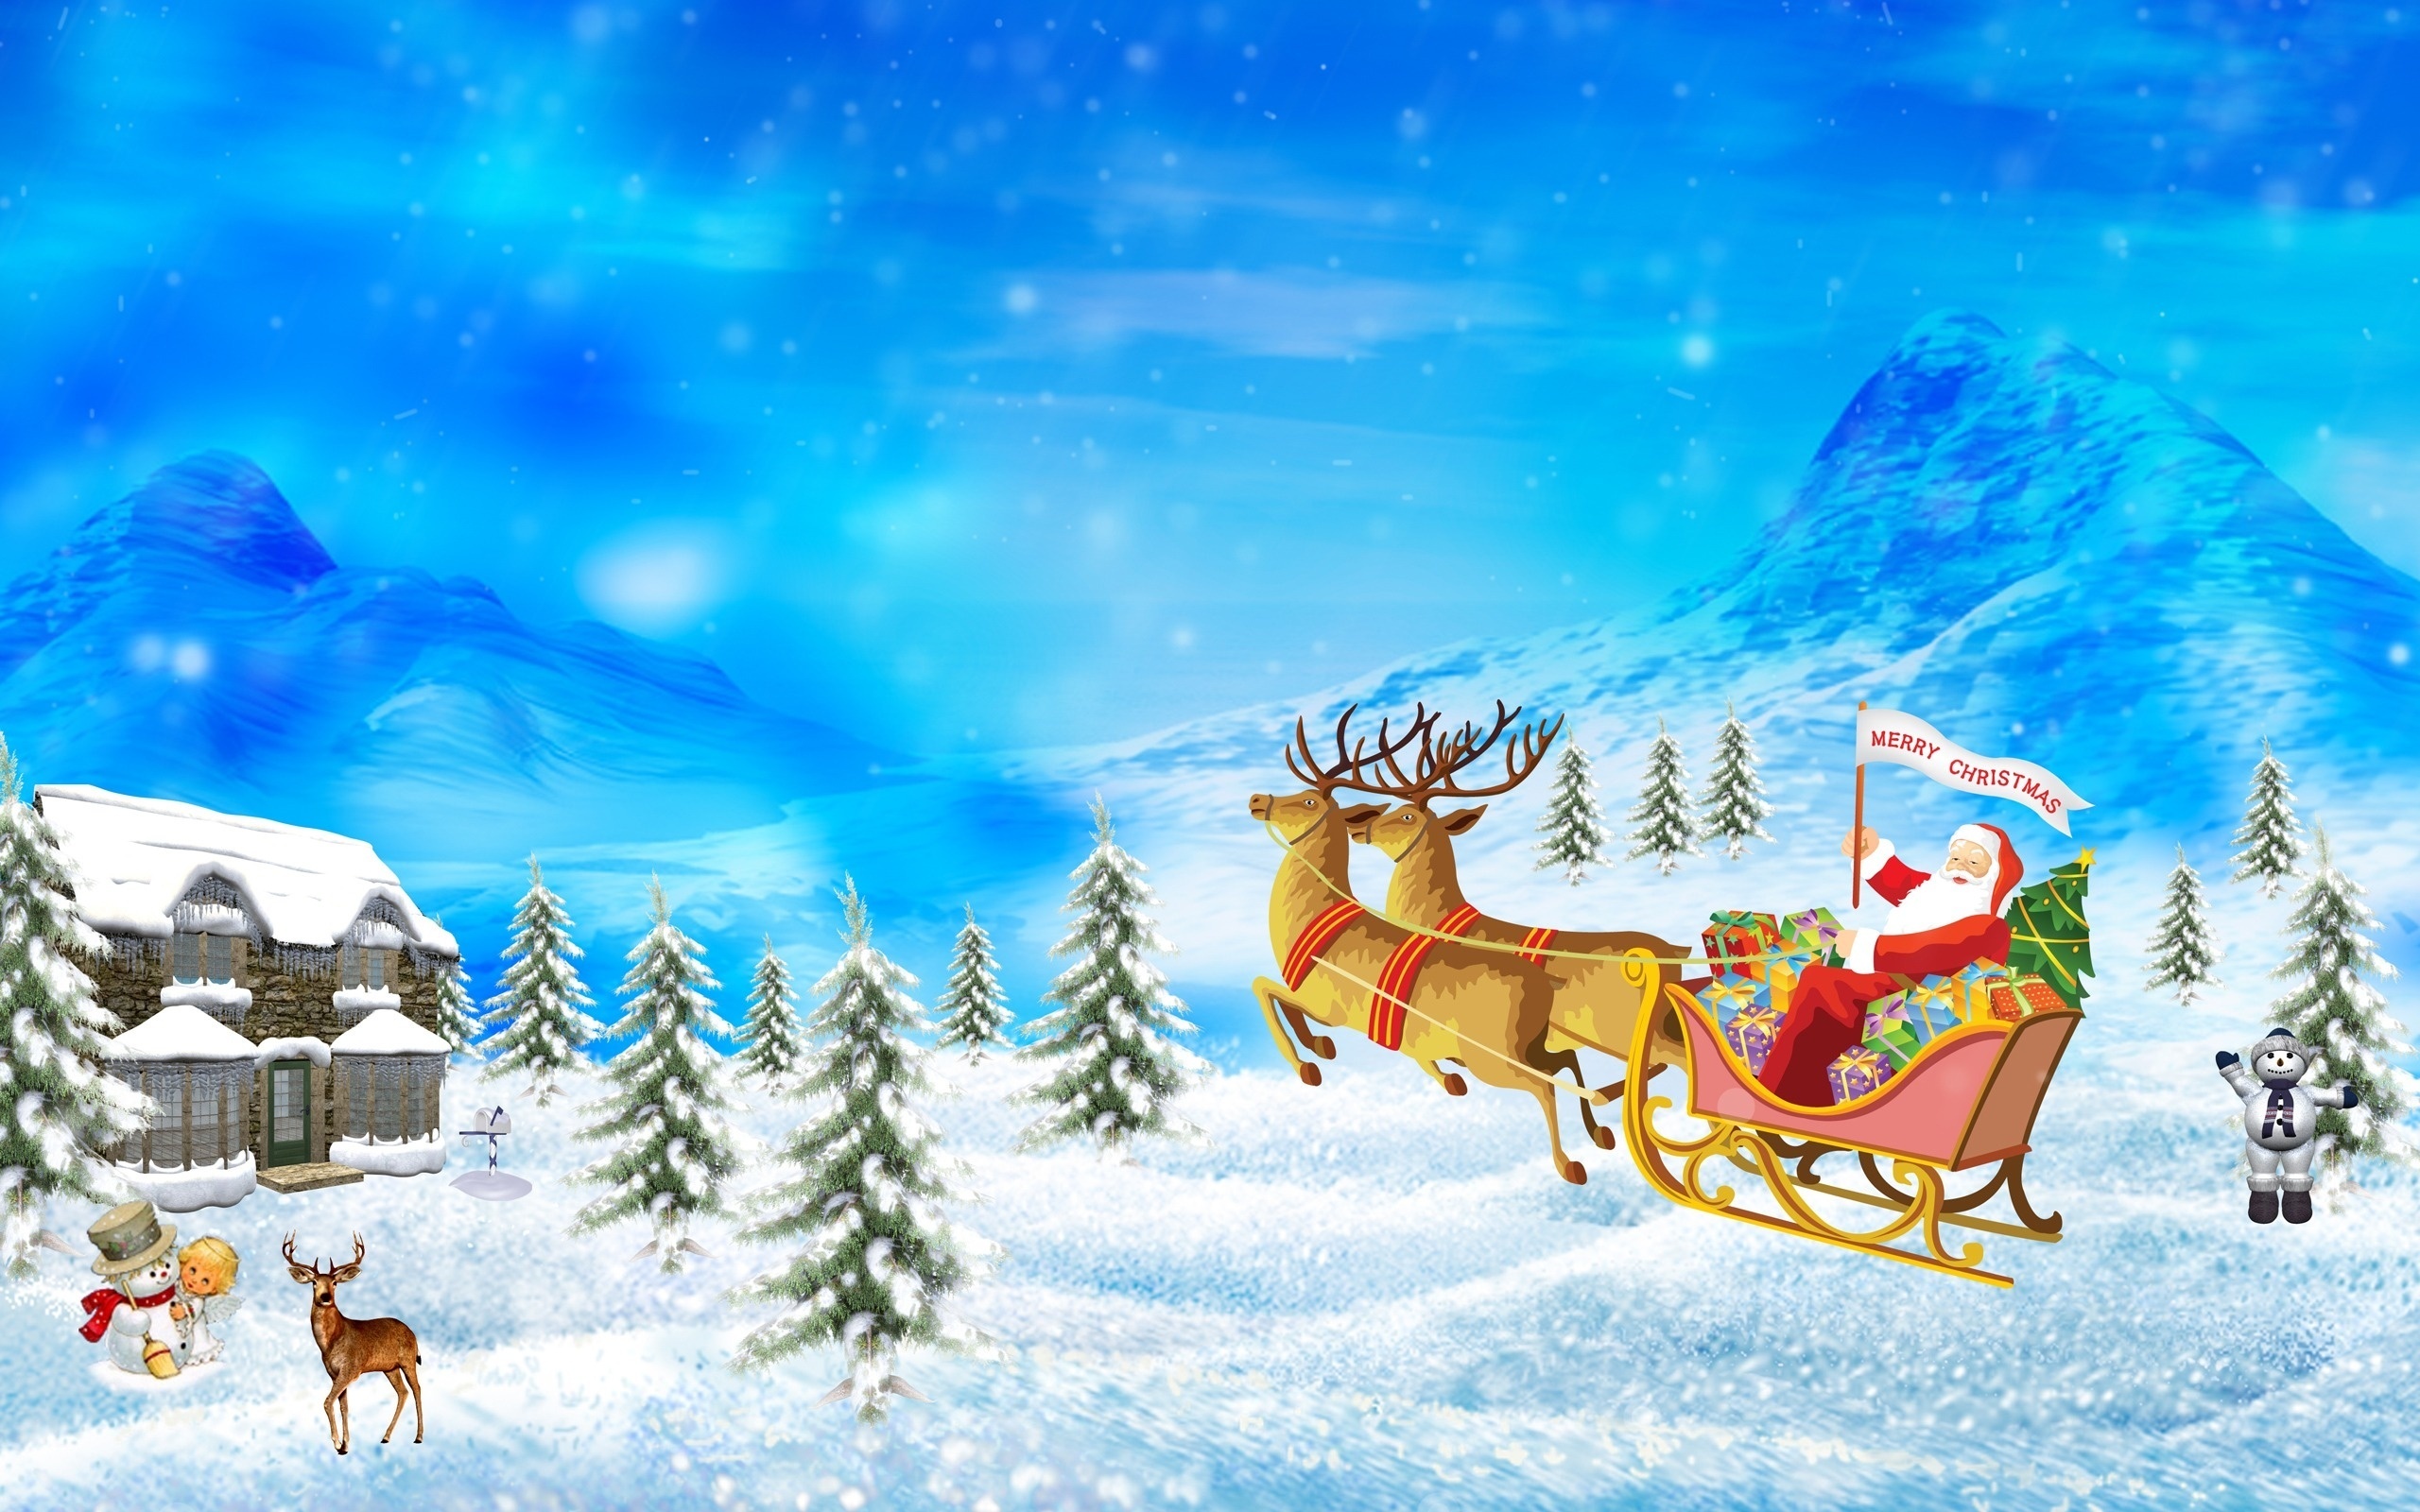 Beautiful Winter and Christmas Wallpaper For Desktops